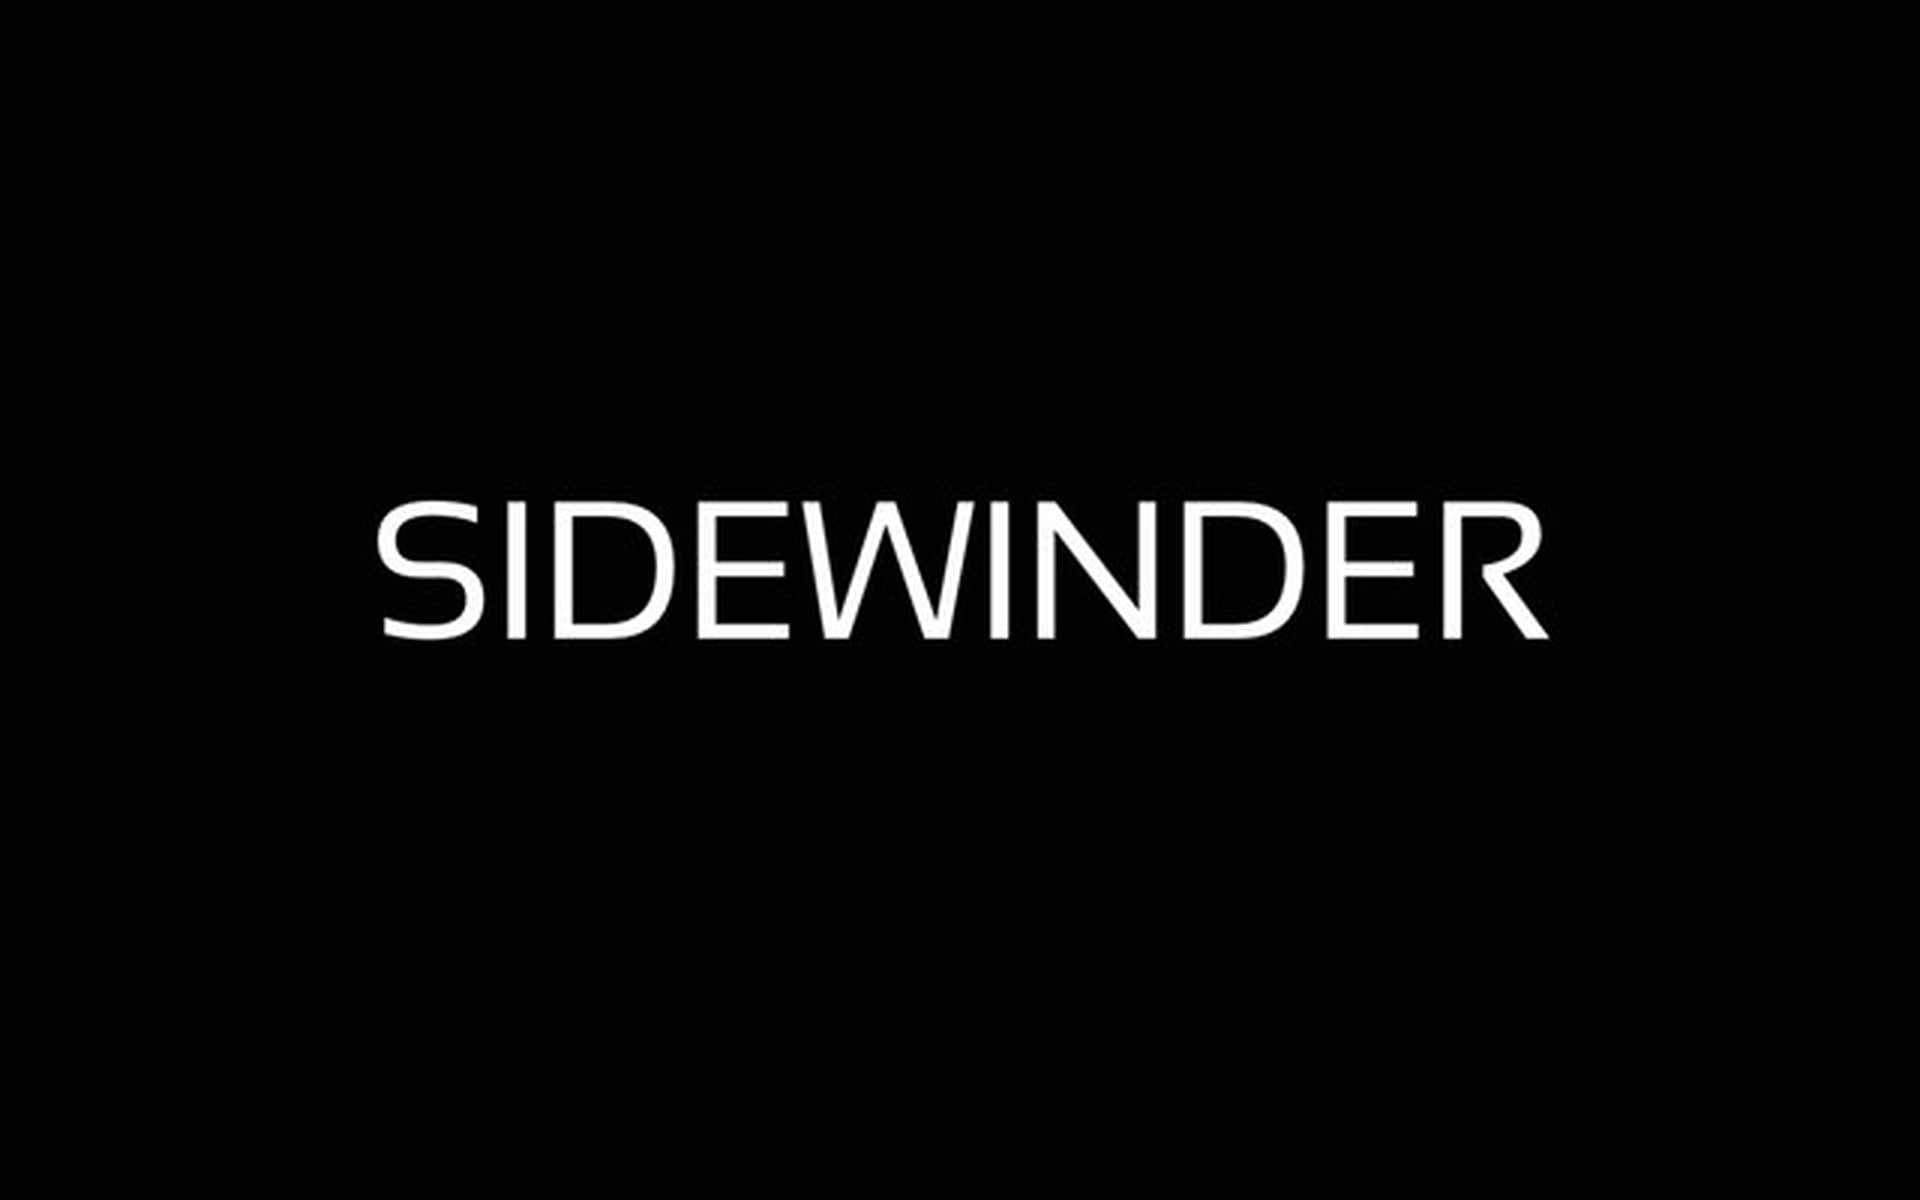 Sidewinder theme for WordPress